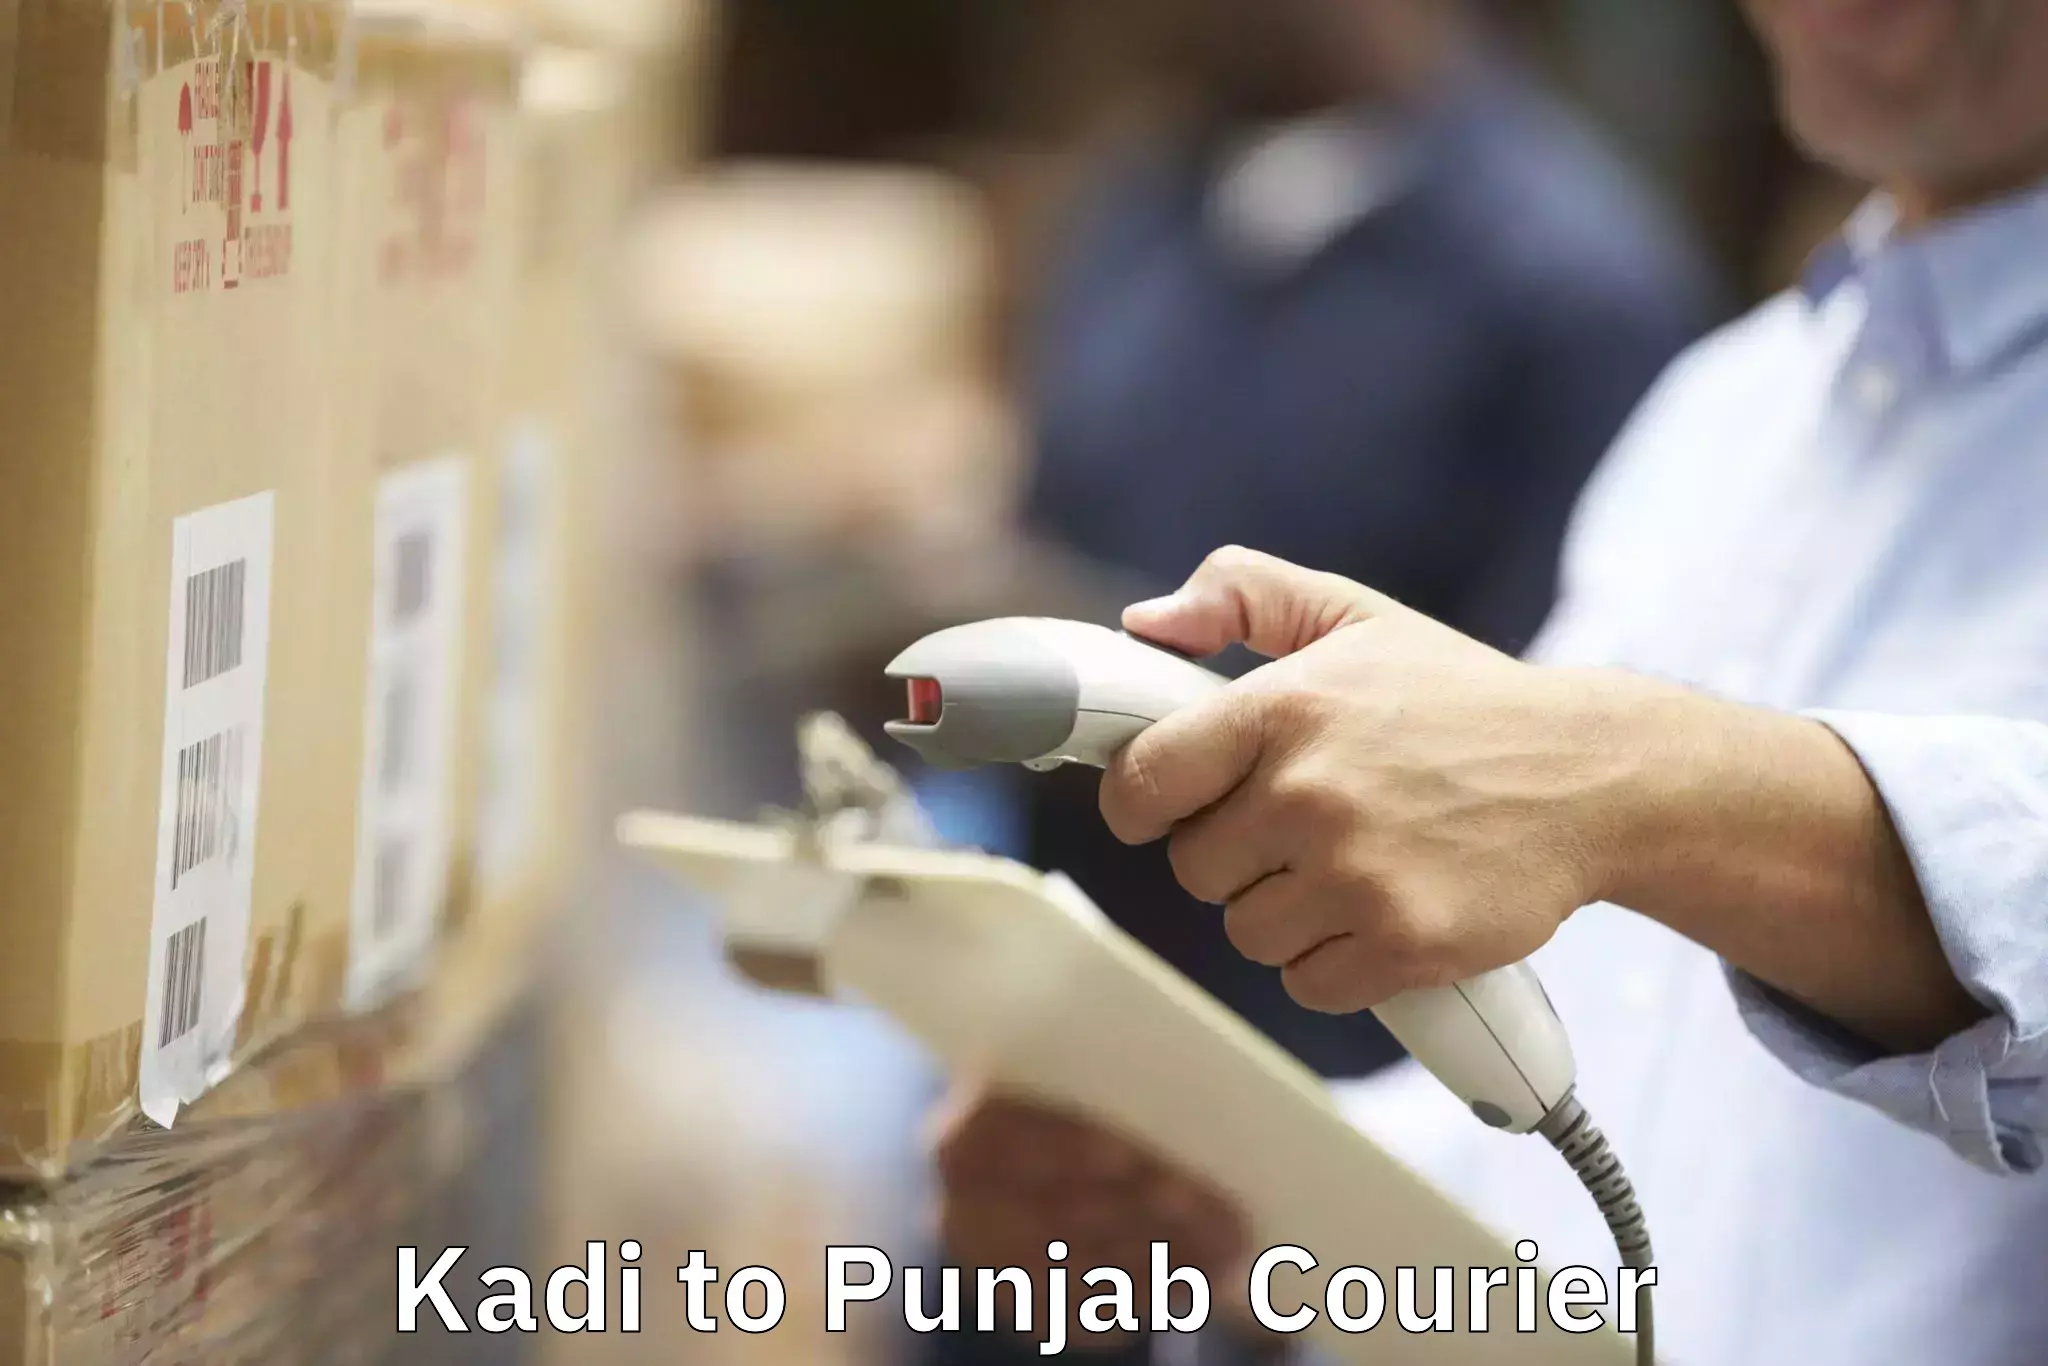 Quality moving and storage Kadi to Punjab